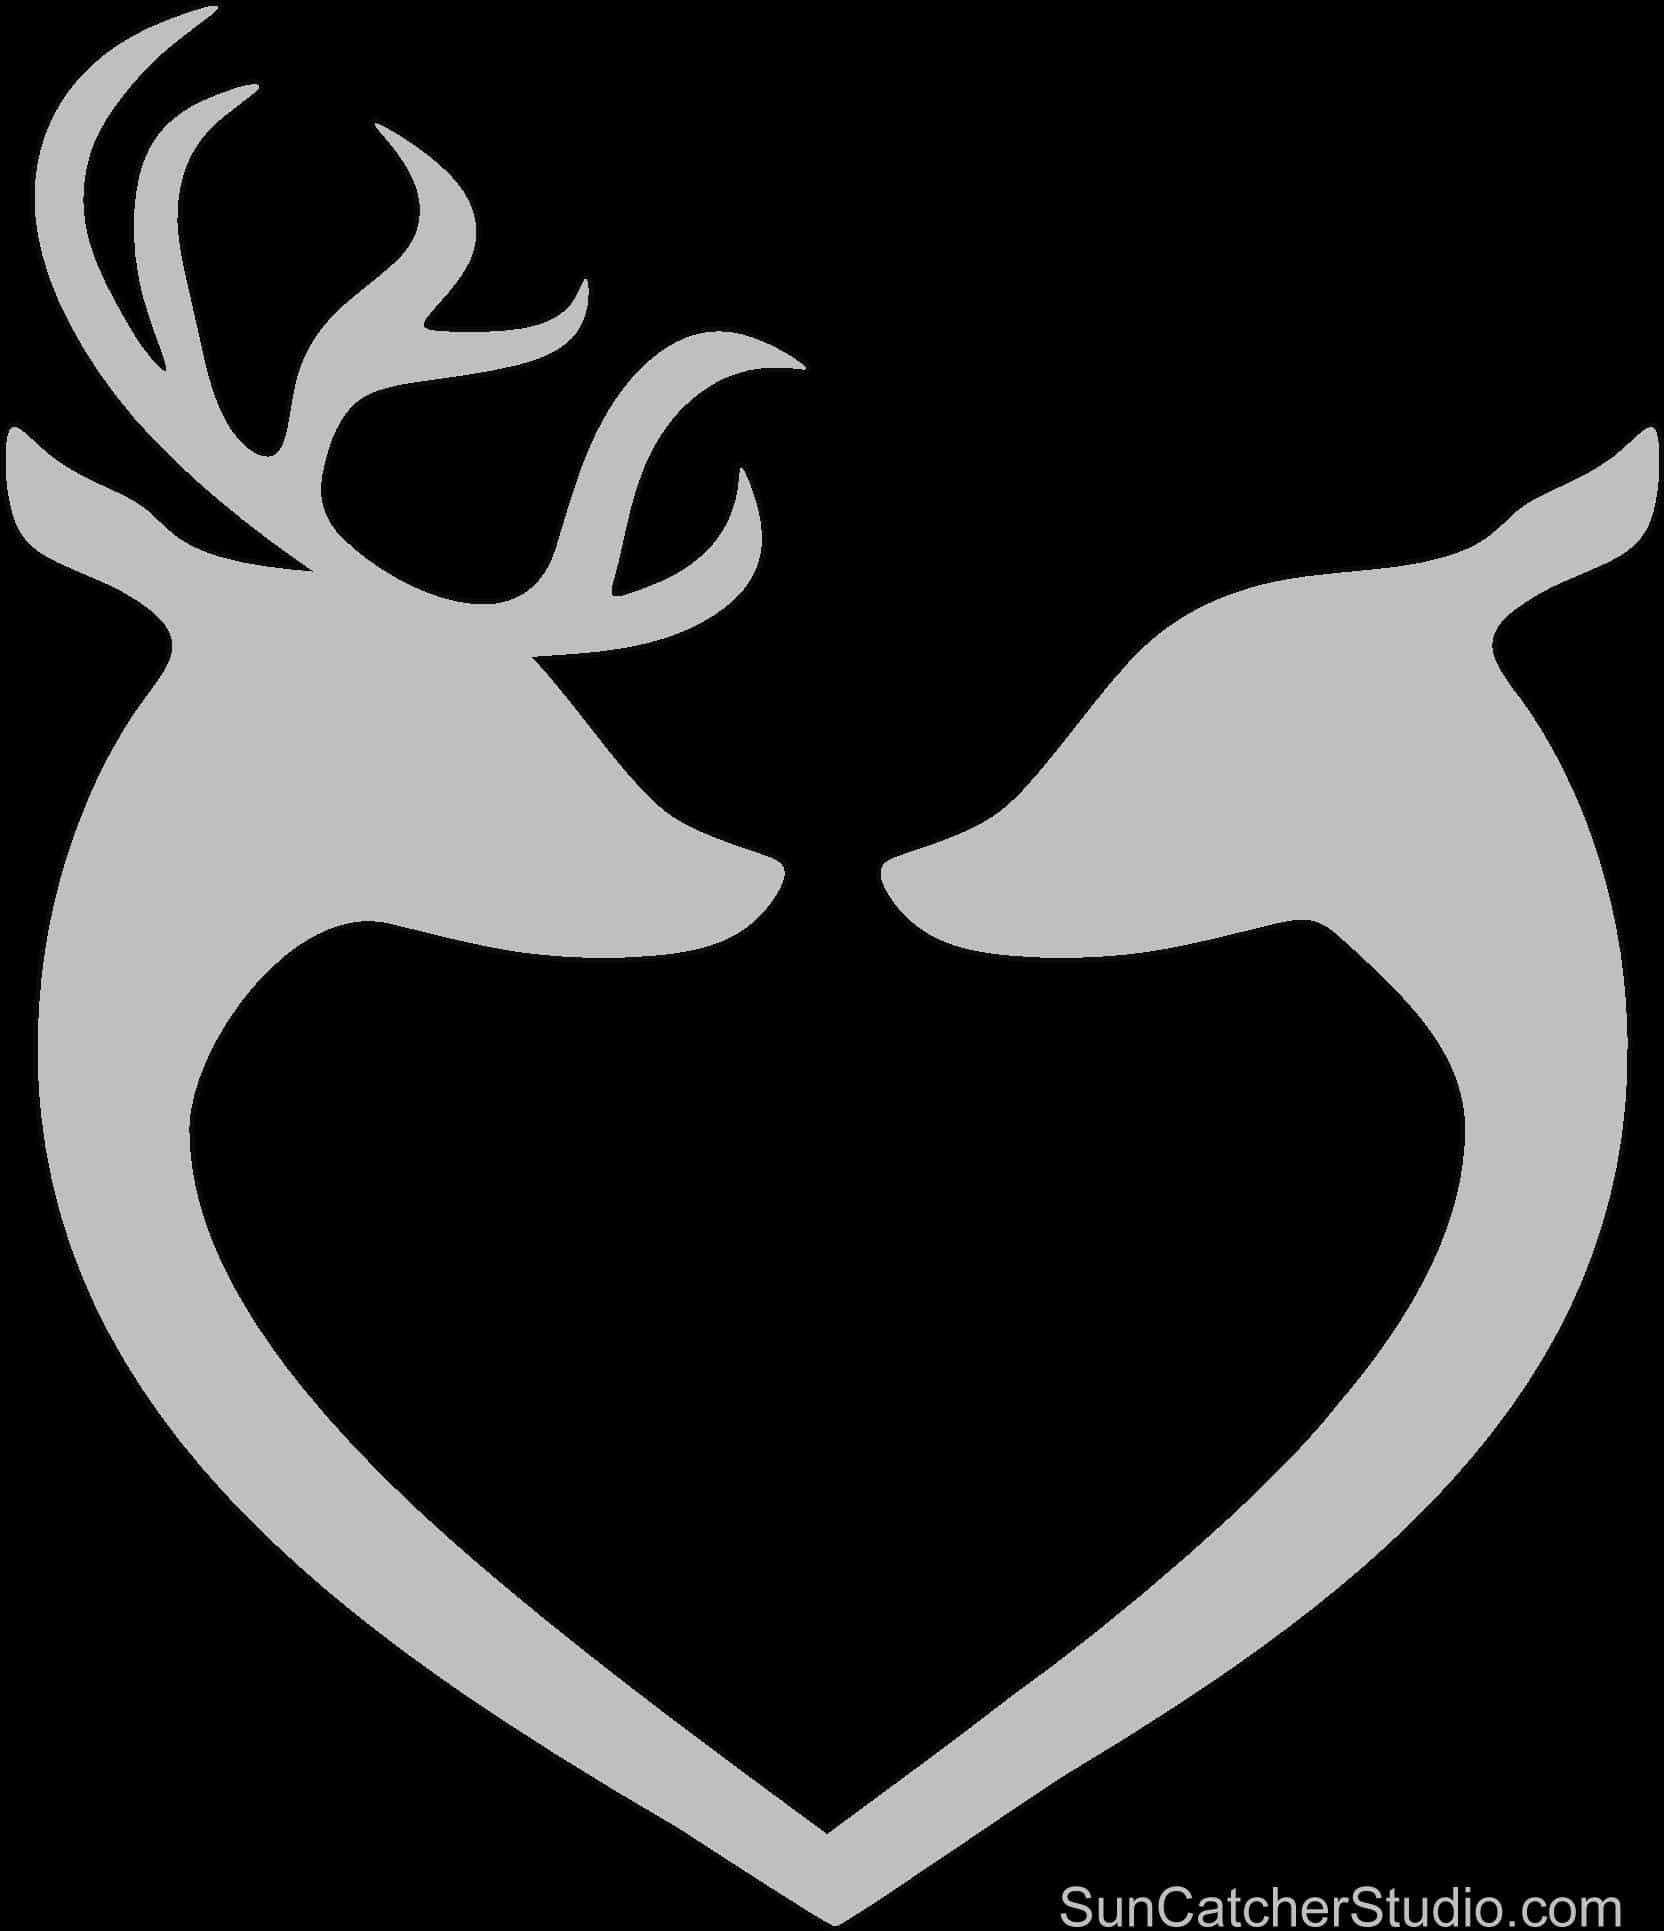 Deer Silhouette Heart Design PNG image